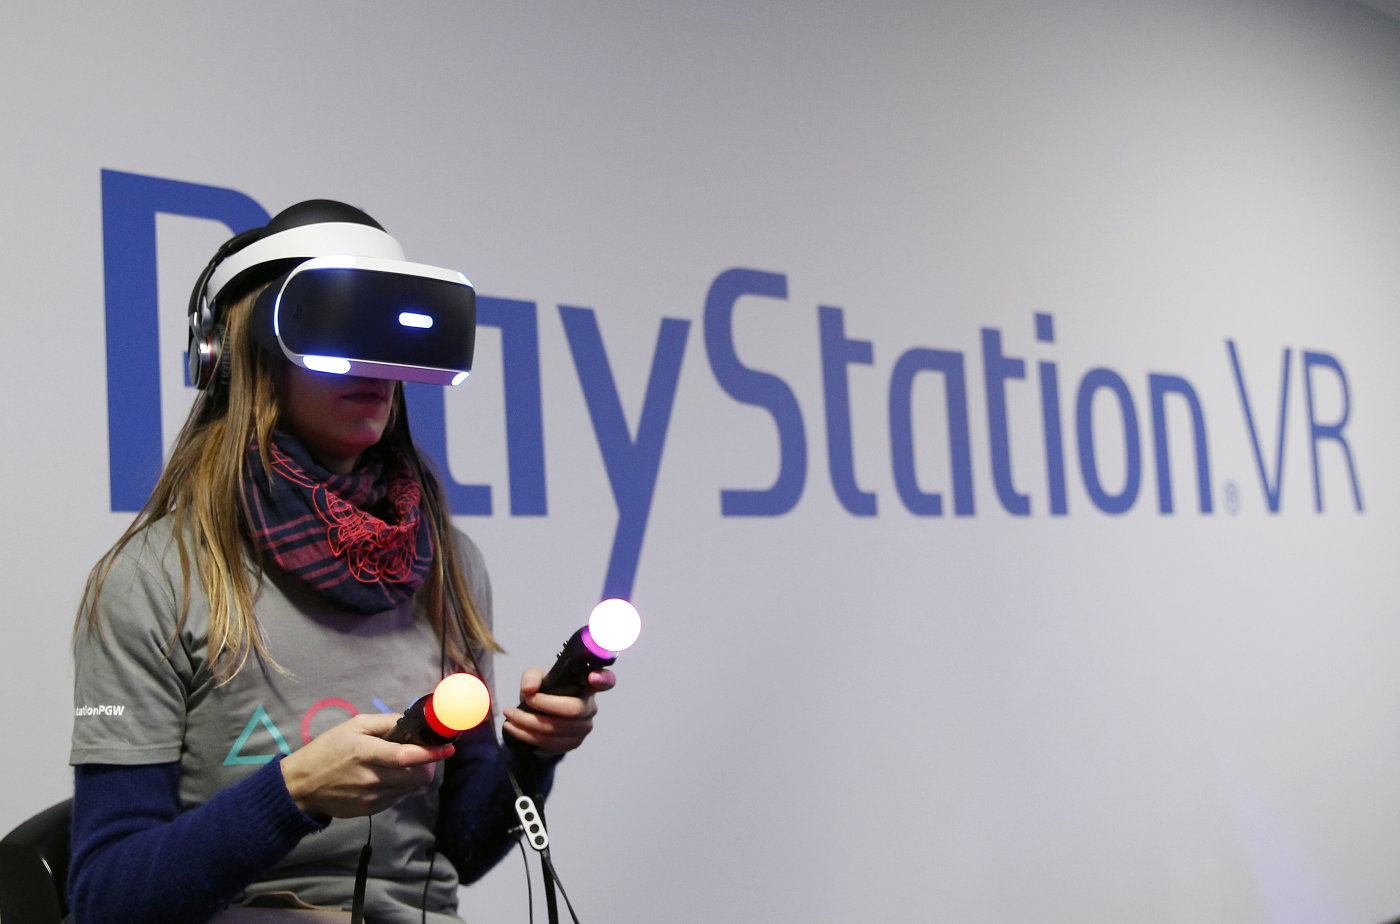 Sony reveló detalles sobre Playstation VR